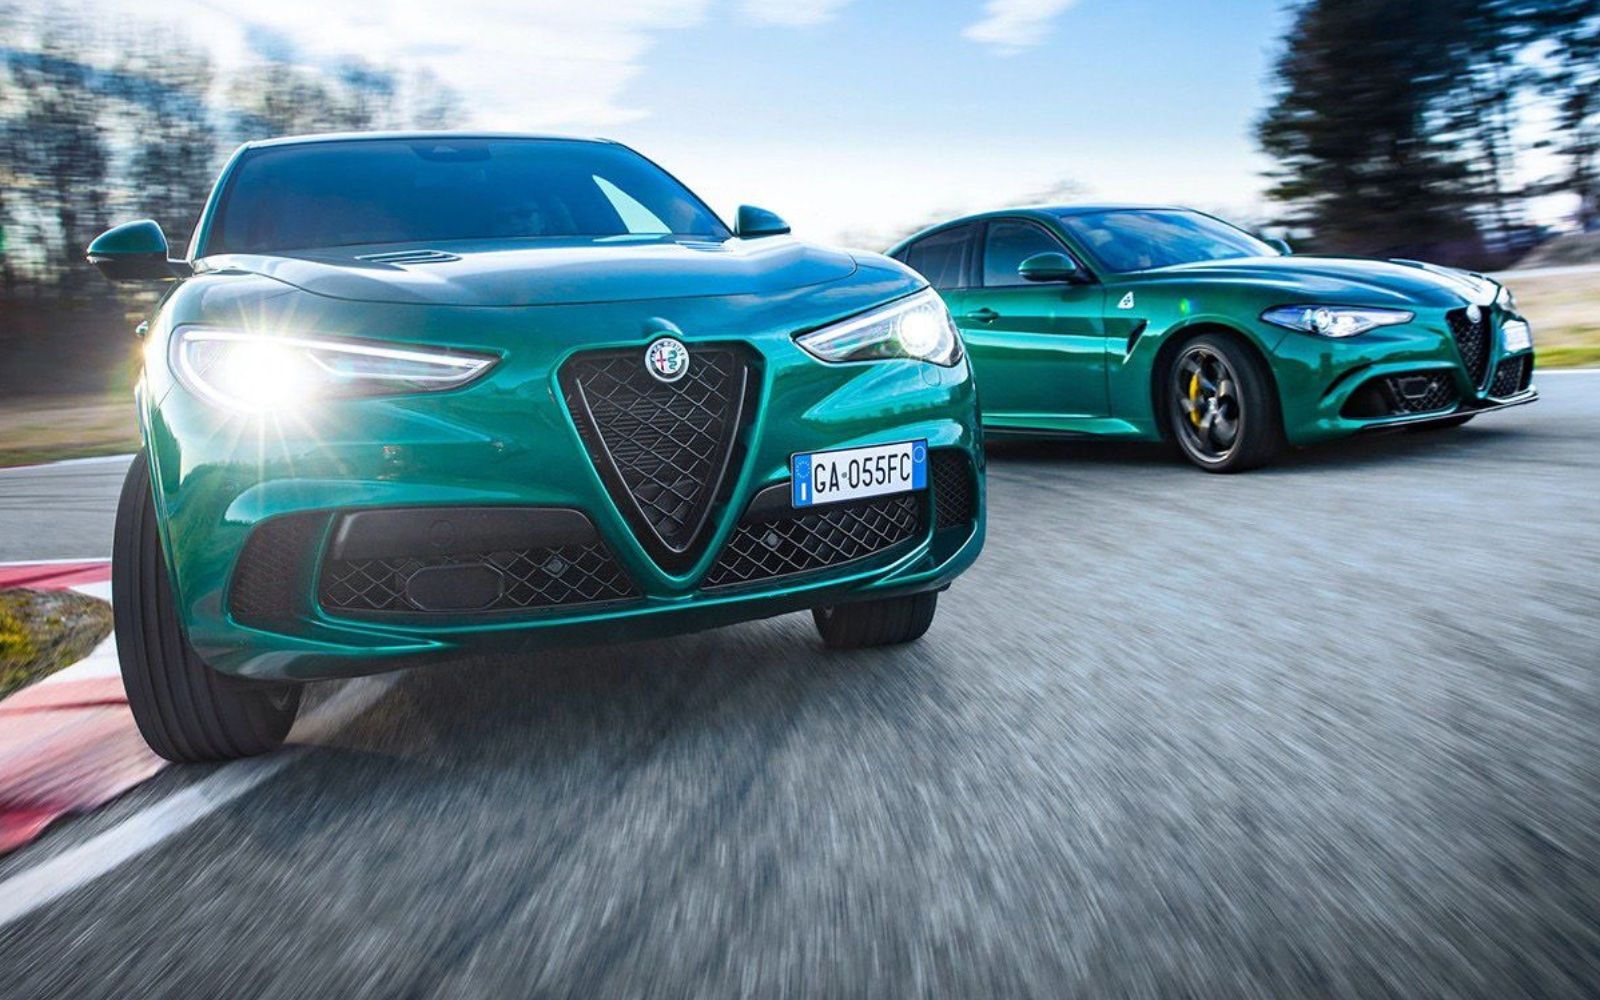 Alfa Romeo Presents the New Giulia and Stelvio Quadrifoglio In Montreal Green and two other exterior colors